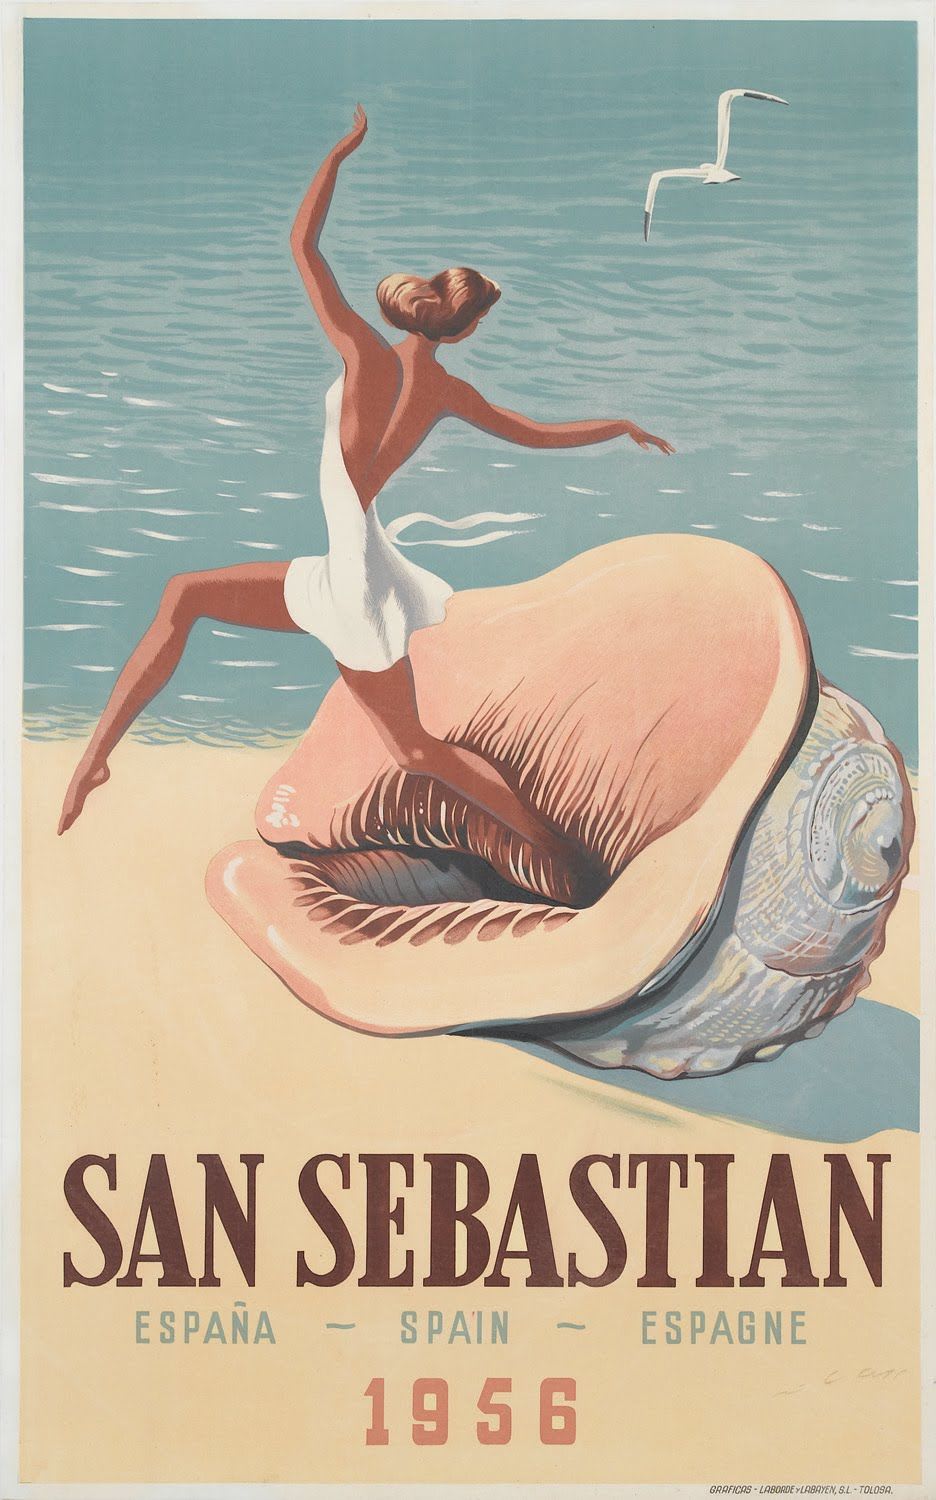 55 Superb Vintage Posters | Top Design Magazine - Web Design and Digital Content